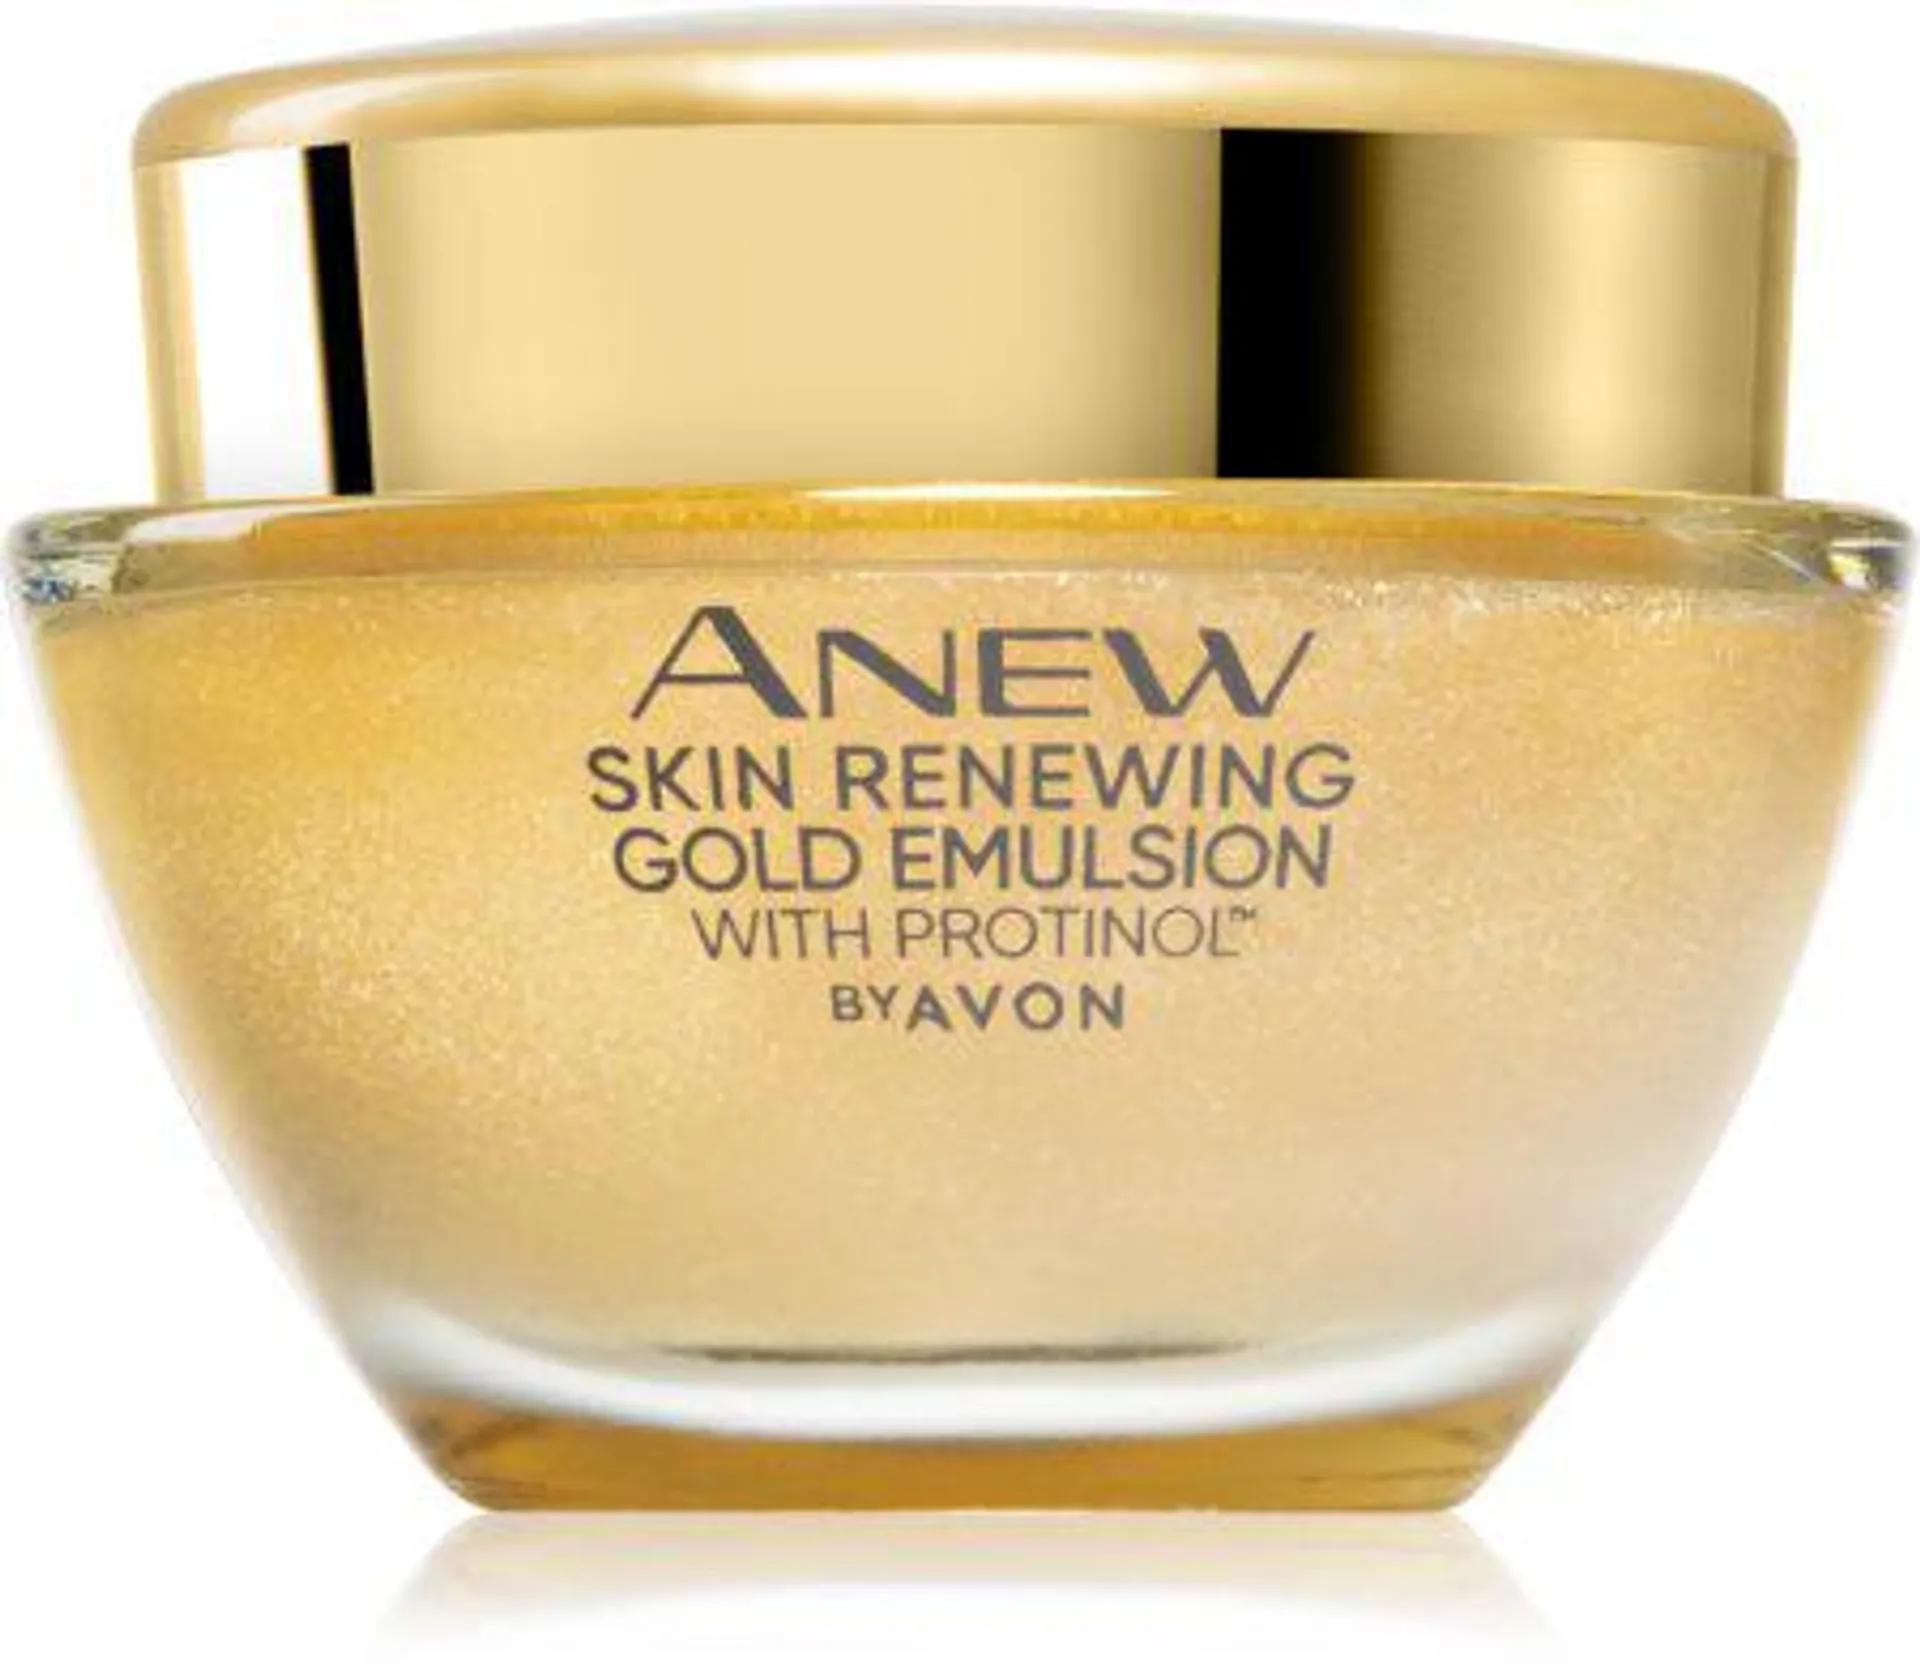 Anew Skin Renewing Gold Emulsion